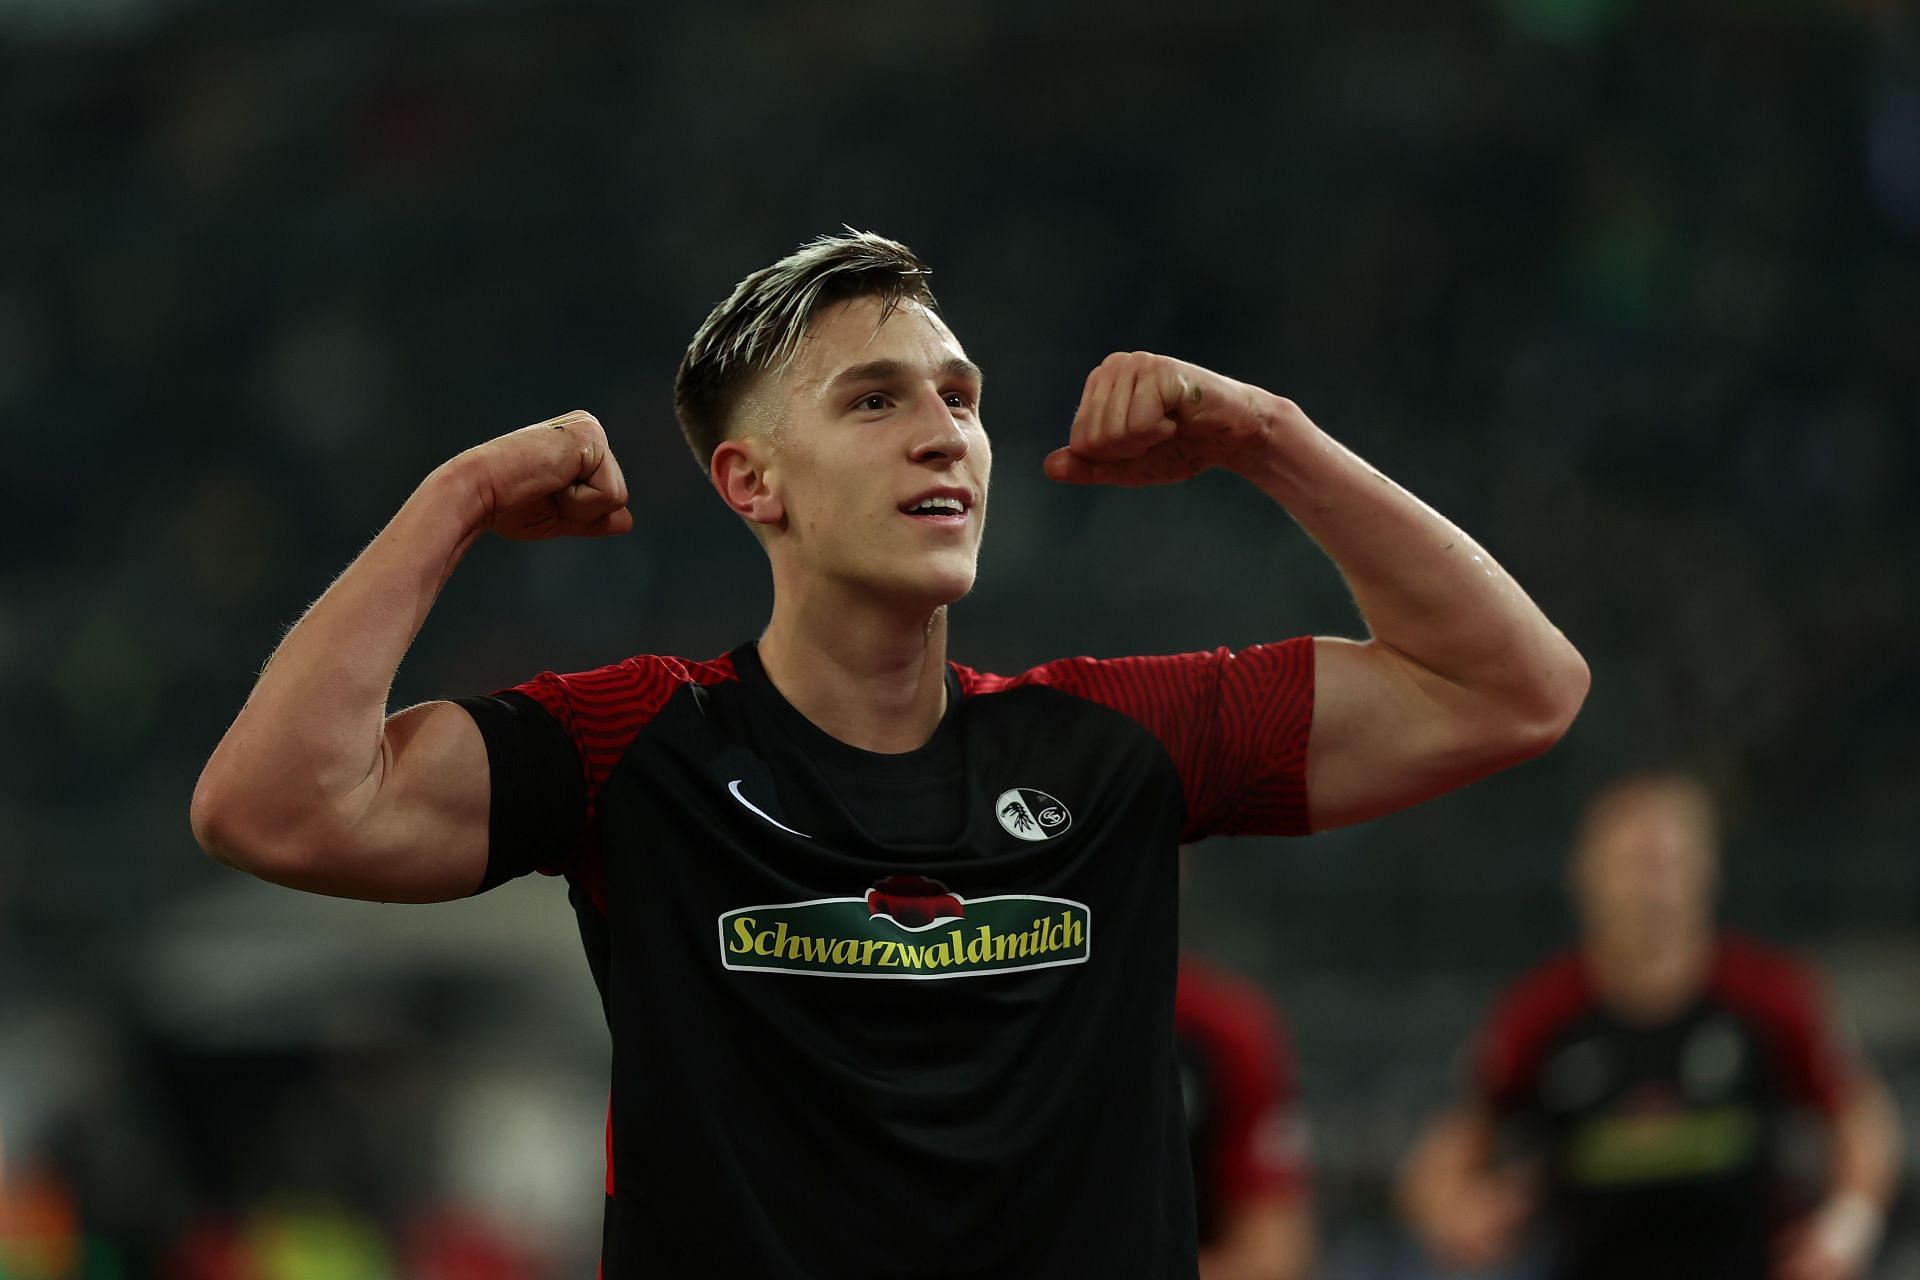 Schlotterbeck is making waves in the Bundesliga this season